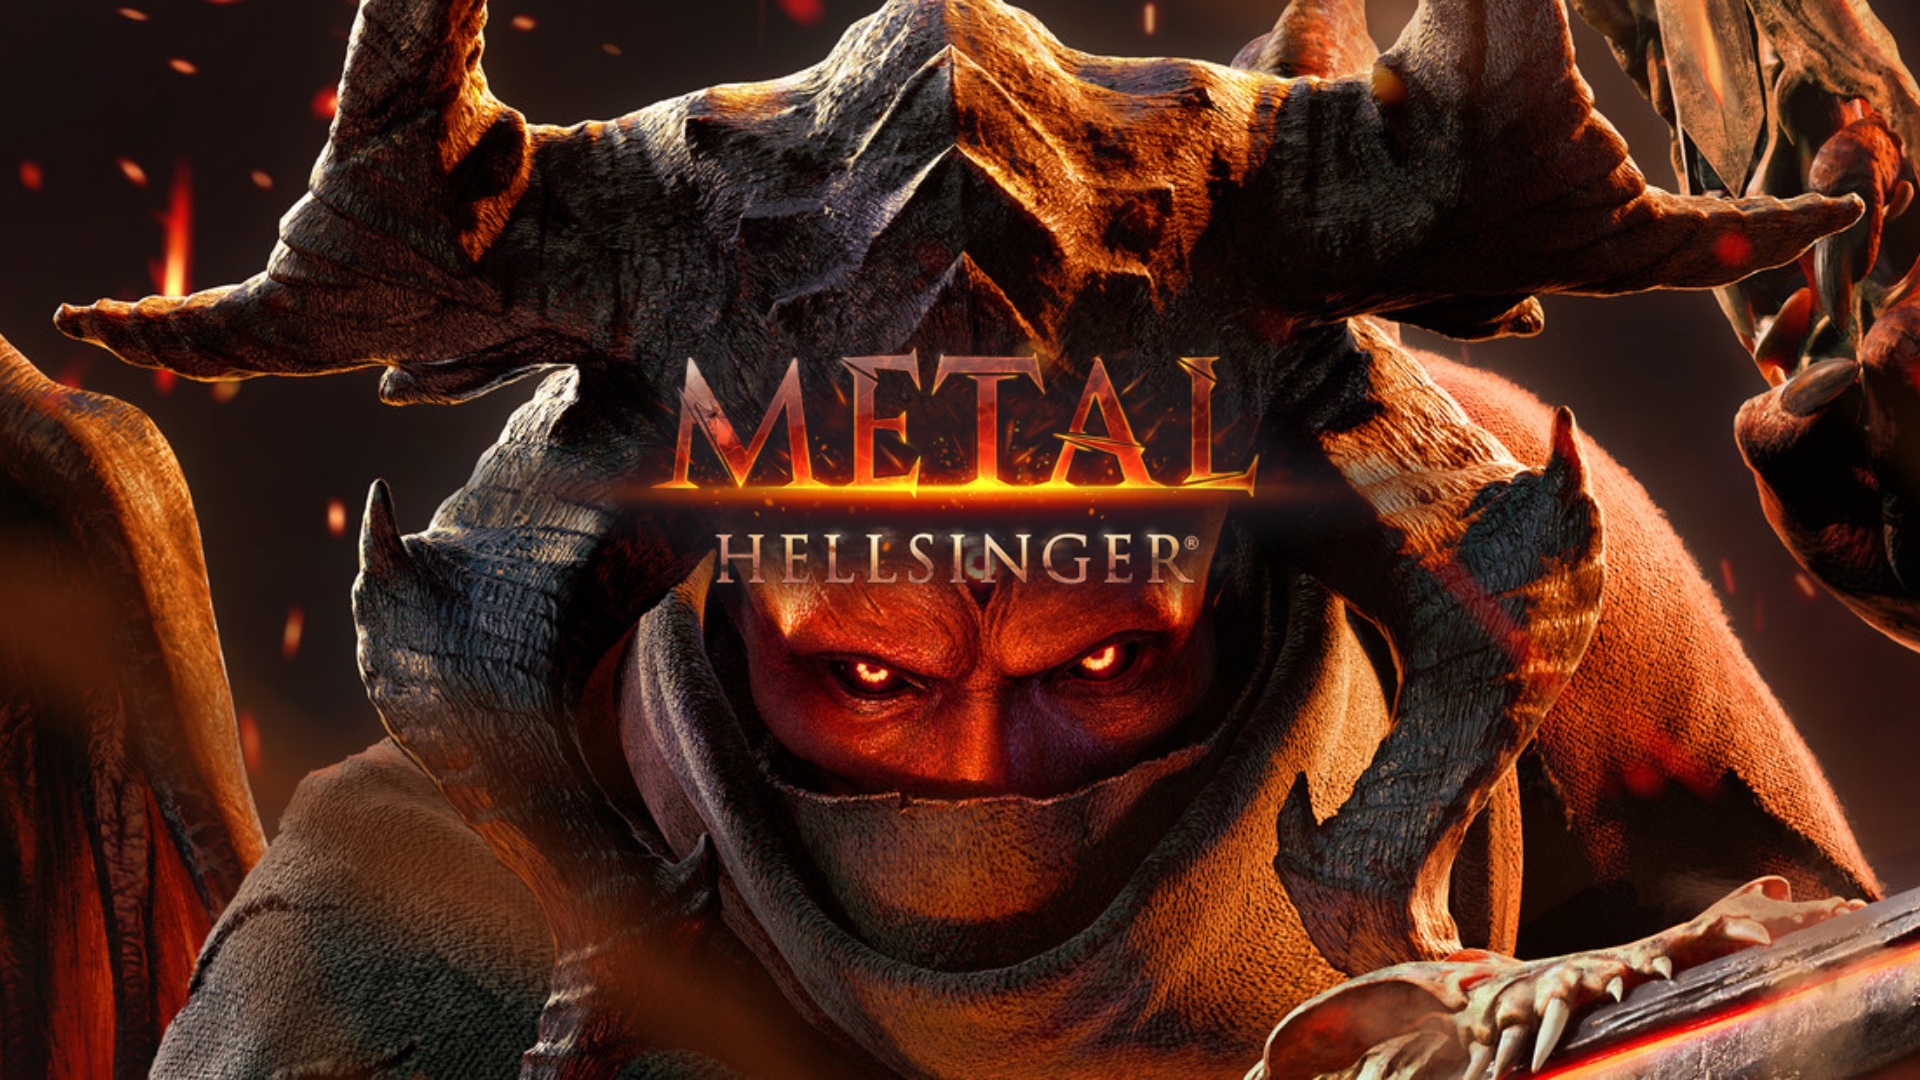 How to Get Started in Metal: Hellsinger